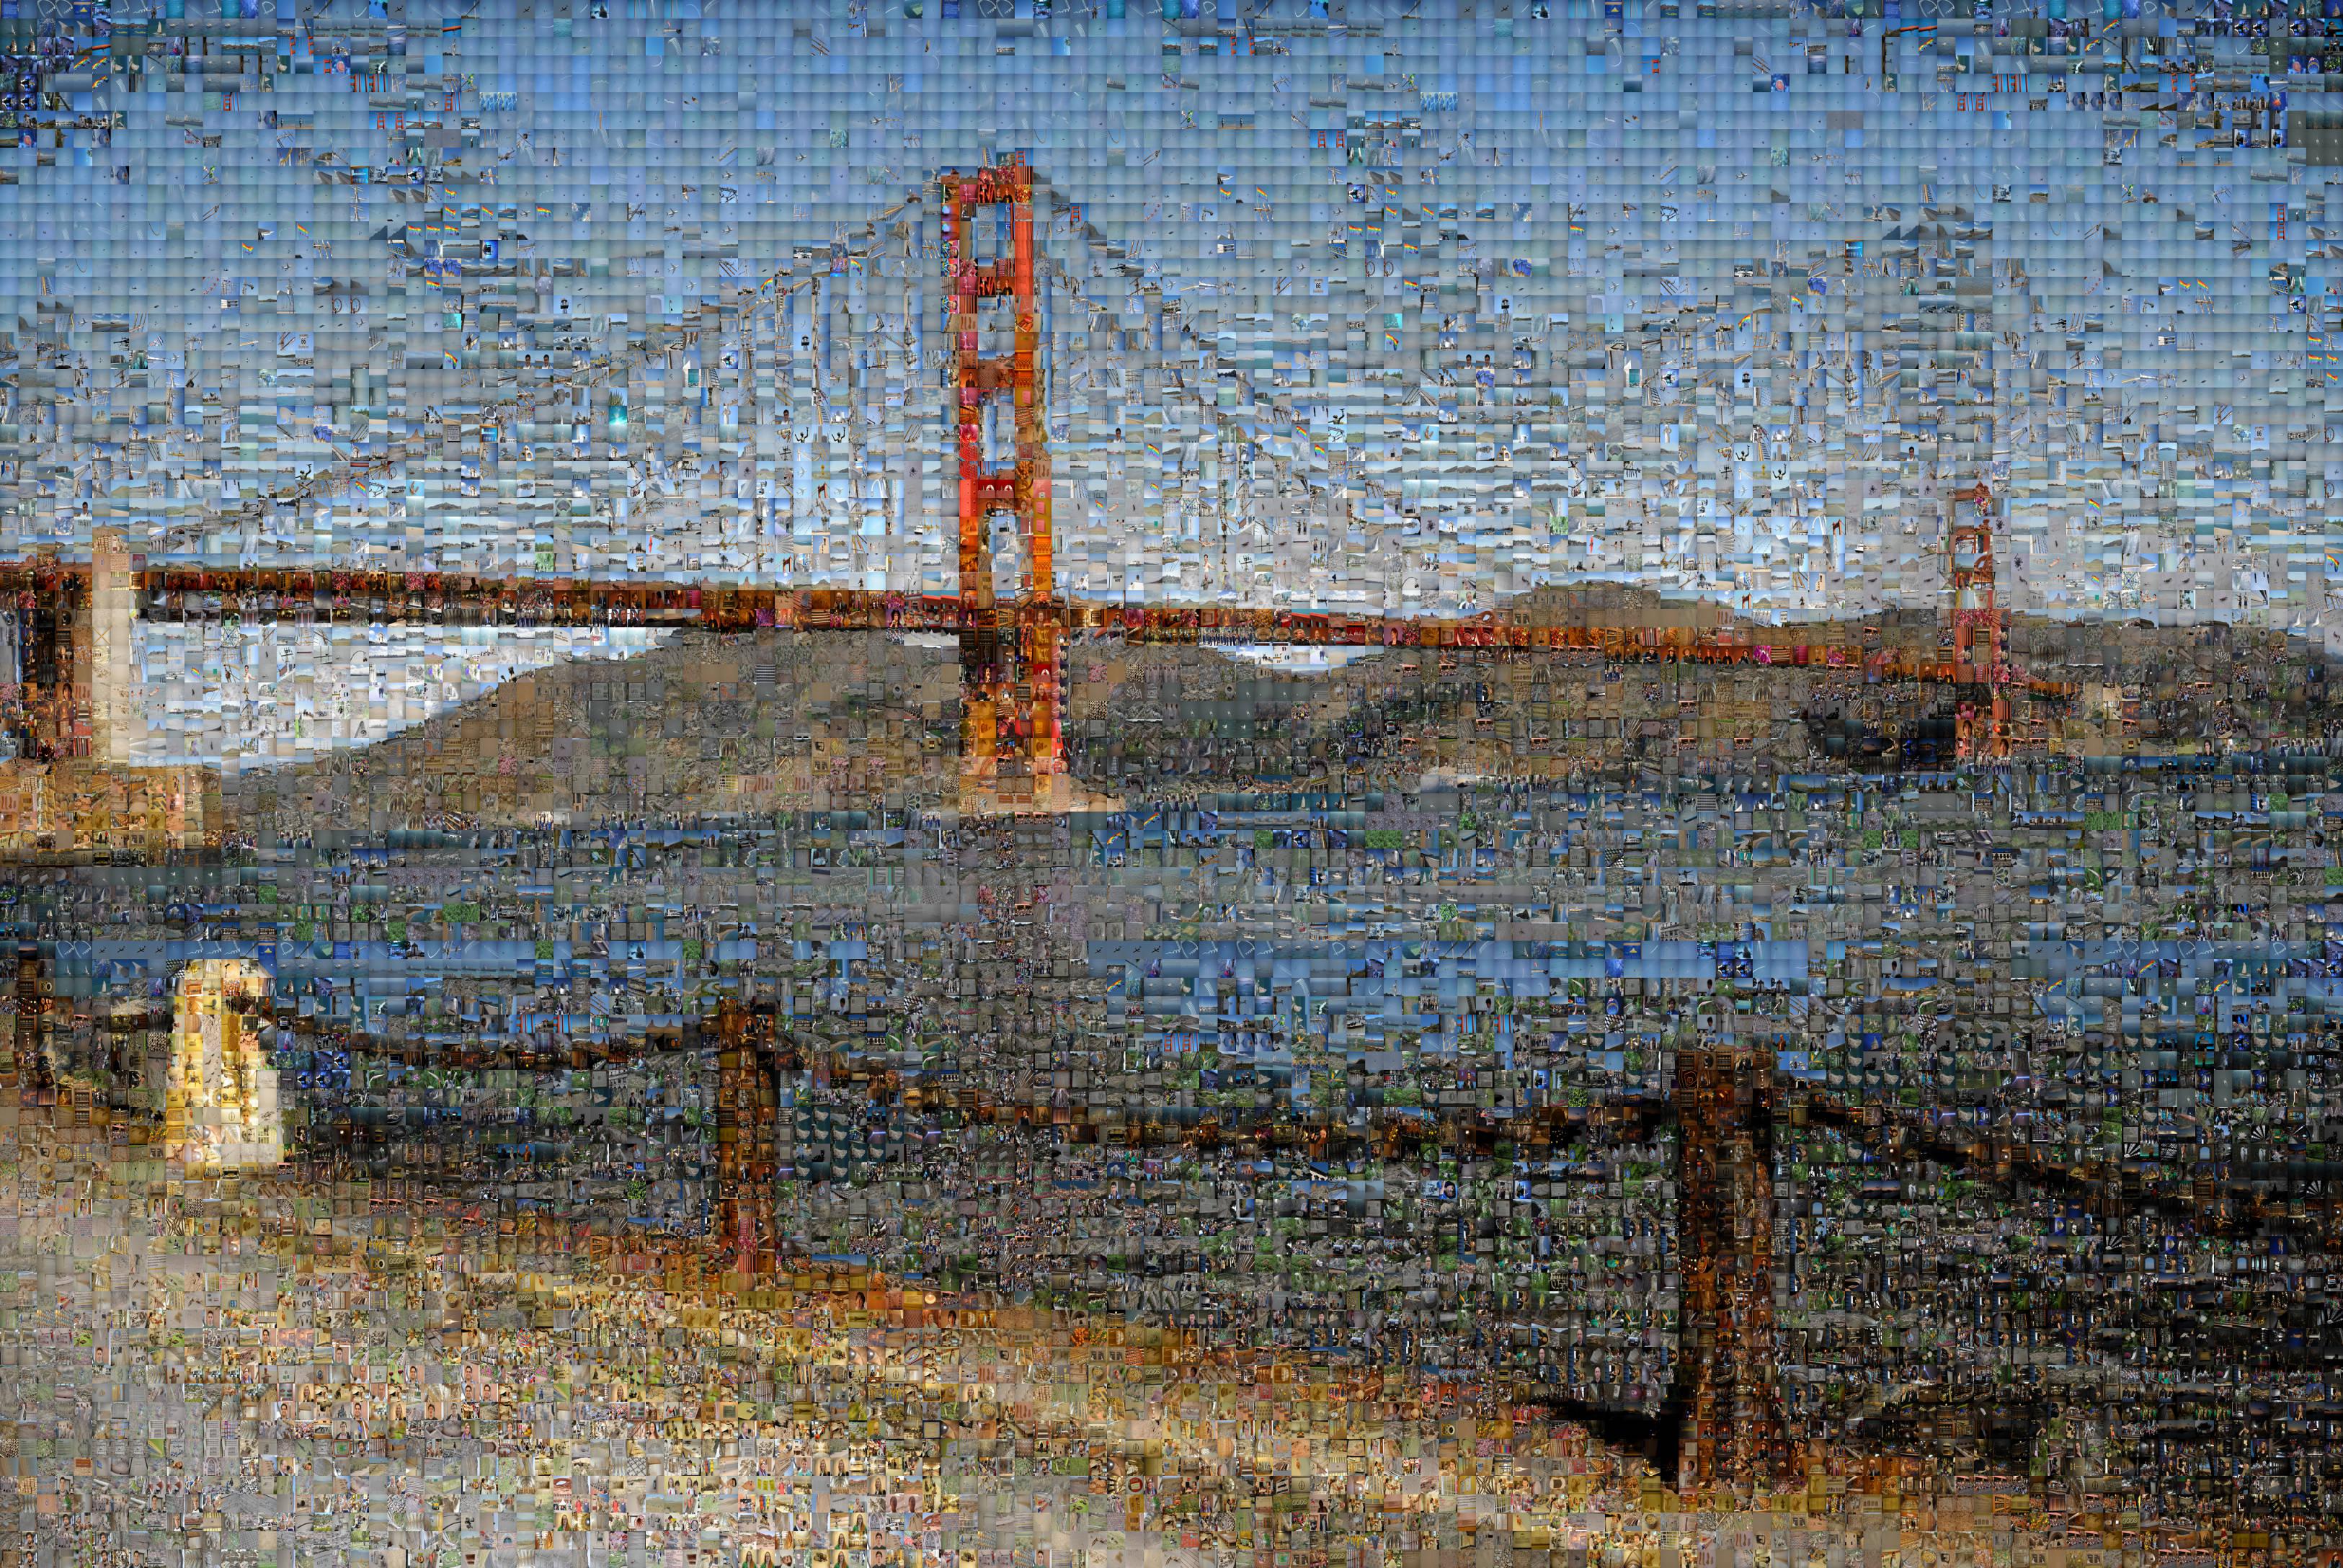 A photographic mosaic depicting the Golden Gate bridge